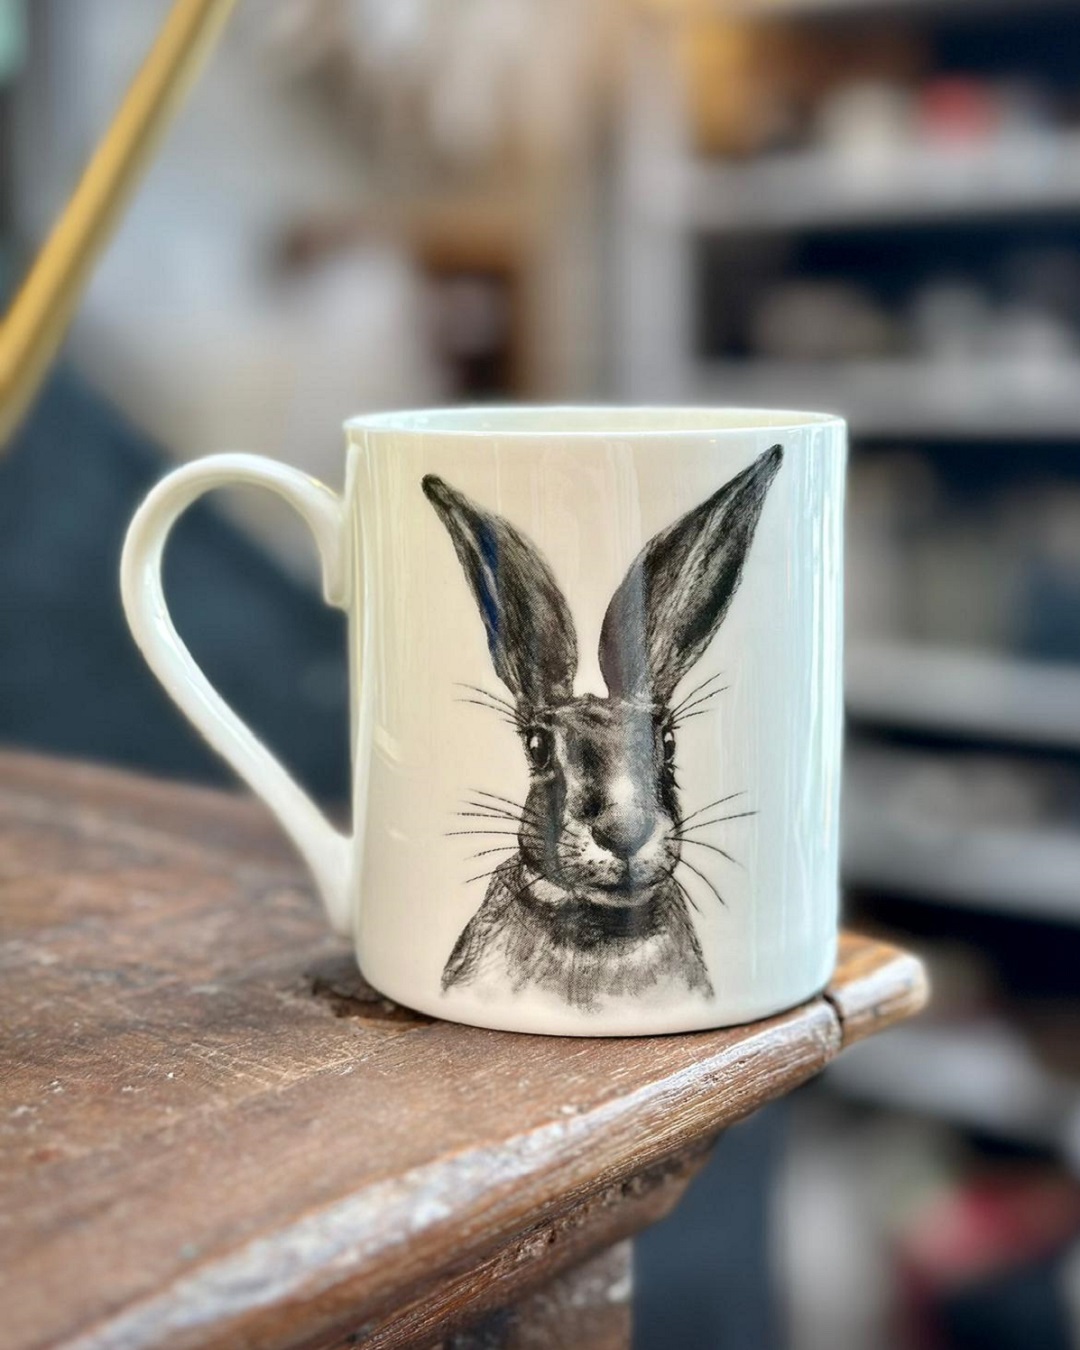 Mug with hare on it